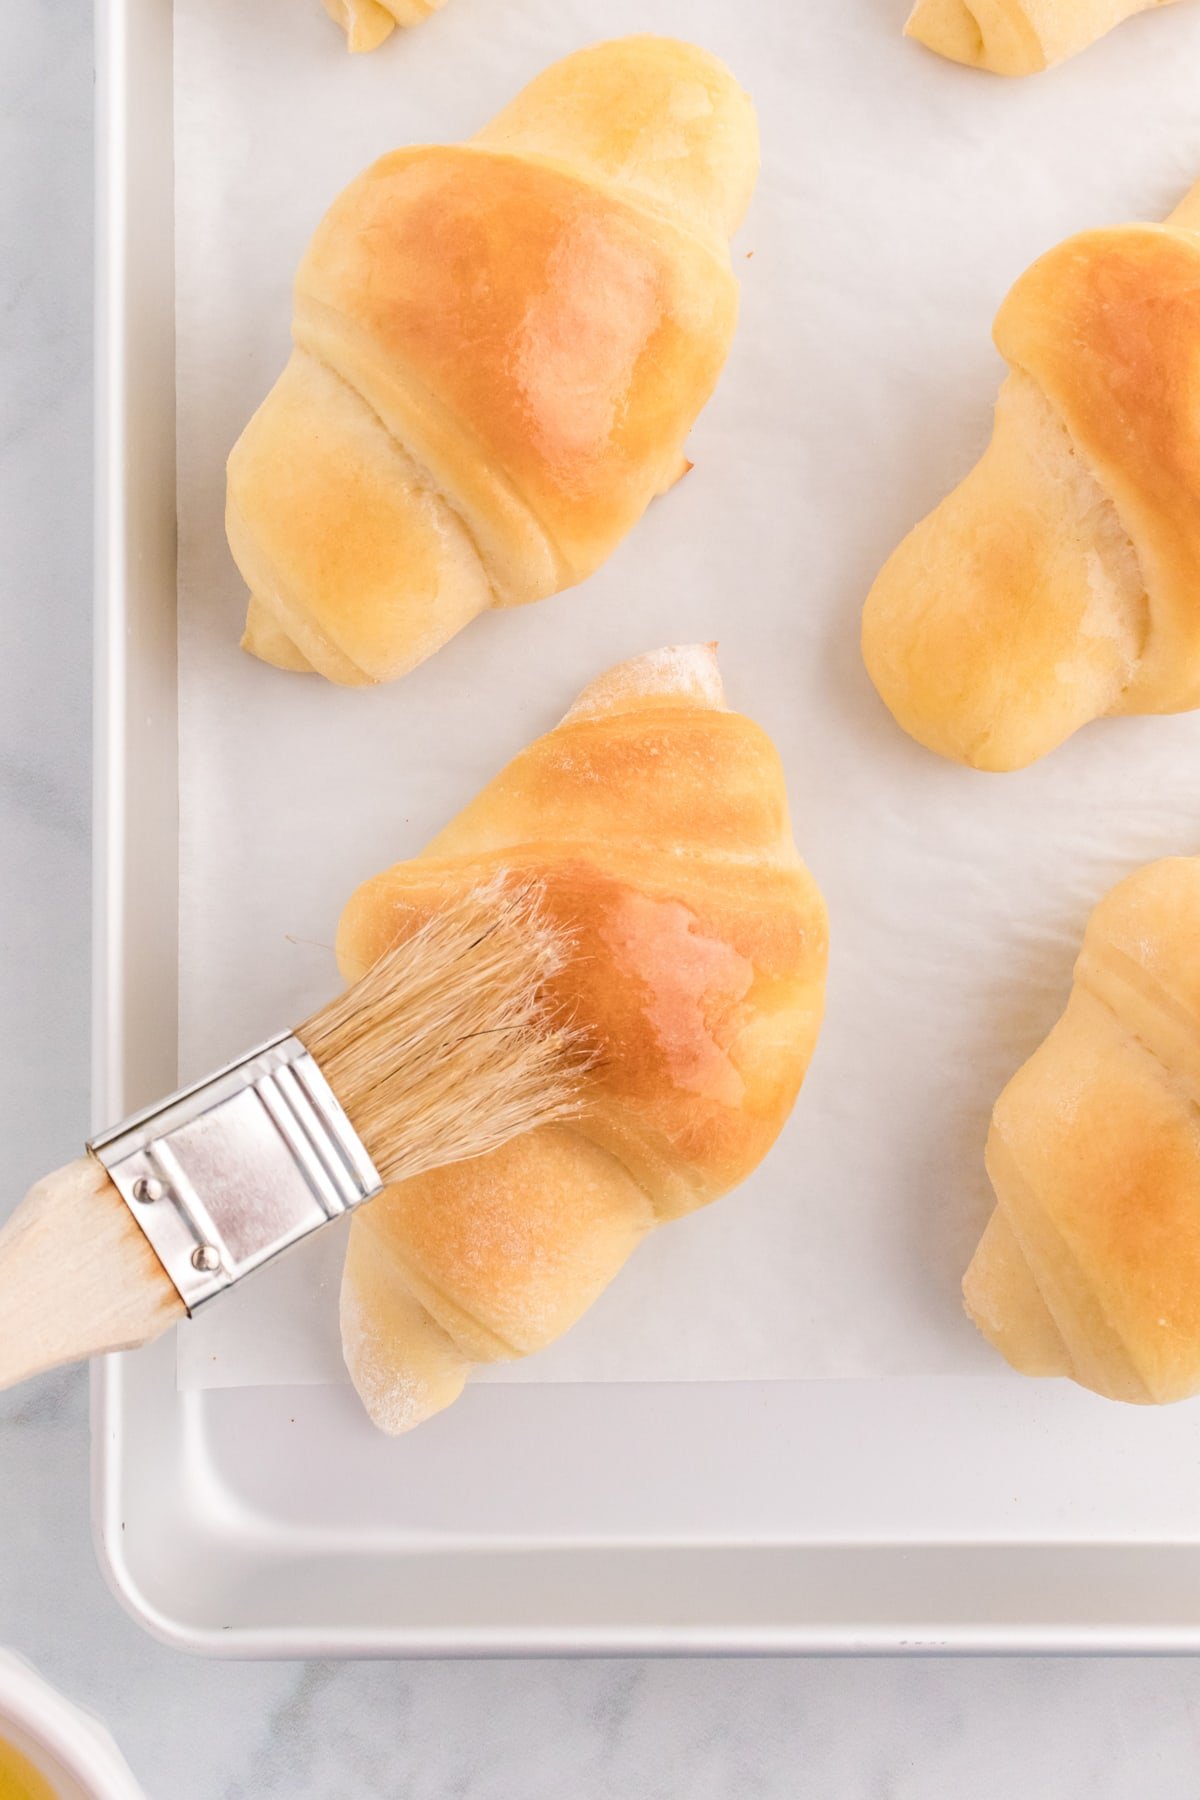 Butter being brushed on freshly baked crescent rolls